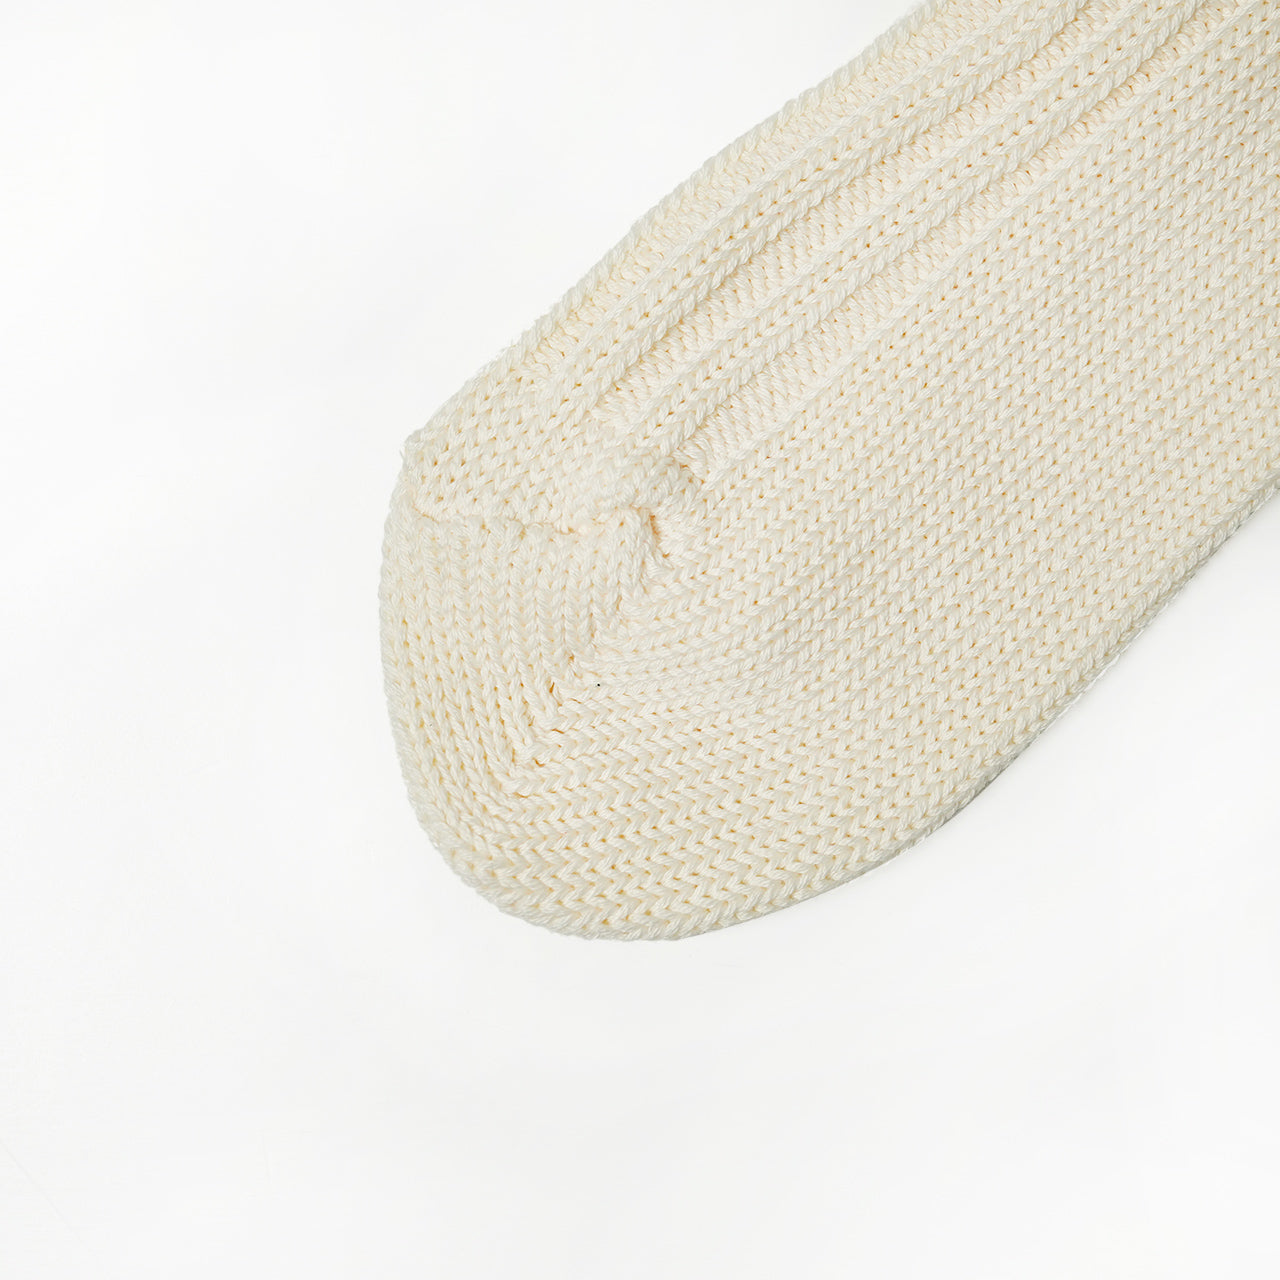 decka Quality socks デカクオリティソックス ヘビーウエイト ソックス Heavyweight Socks 靴下 カラー リブソックス de-29 de-29-2 【メール便可】